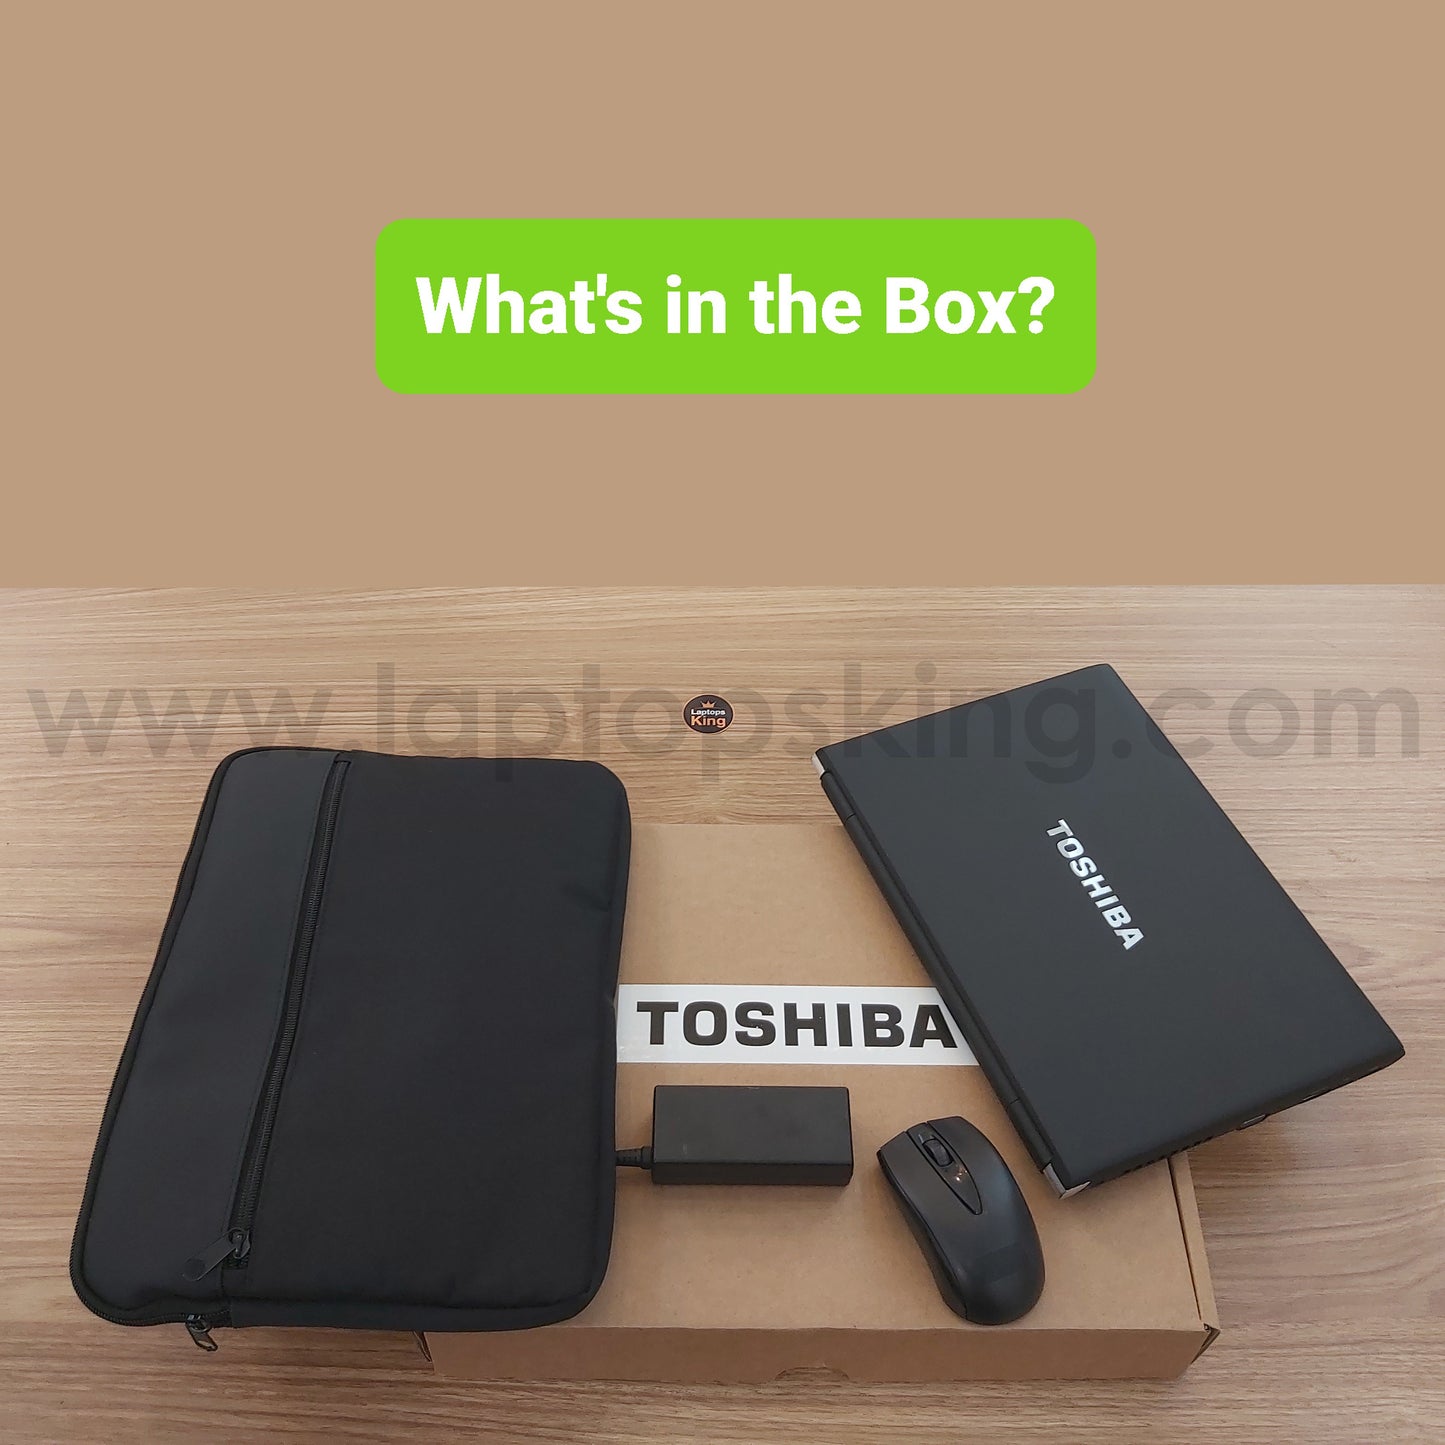 Toshiba Portege R700 Core i7 13.3"" Laptop (Used Very Clean)